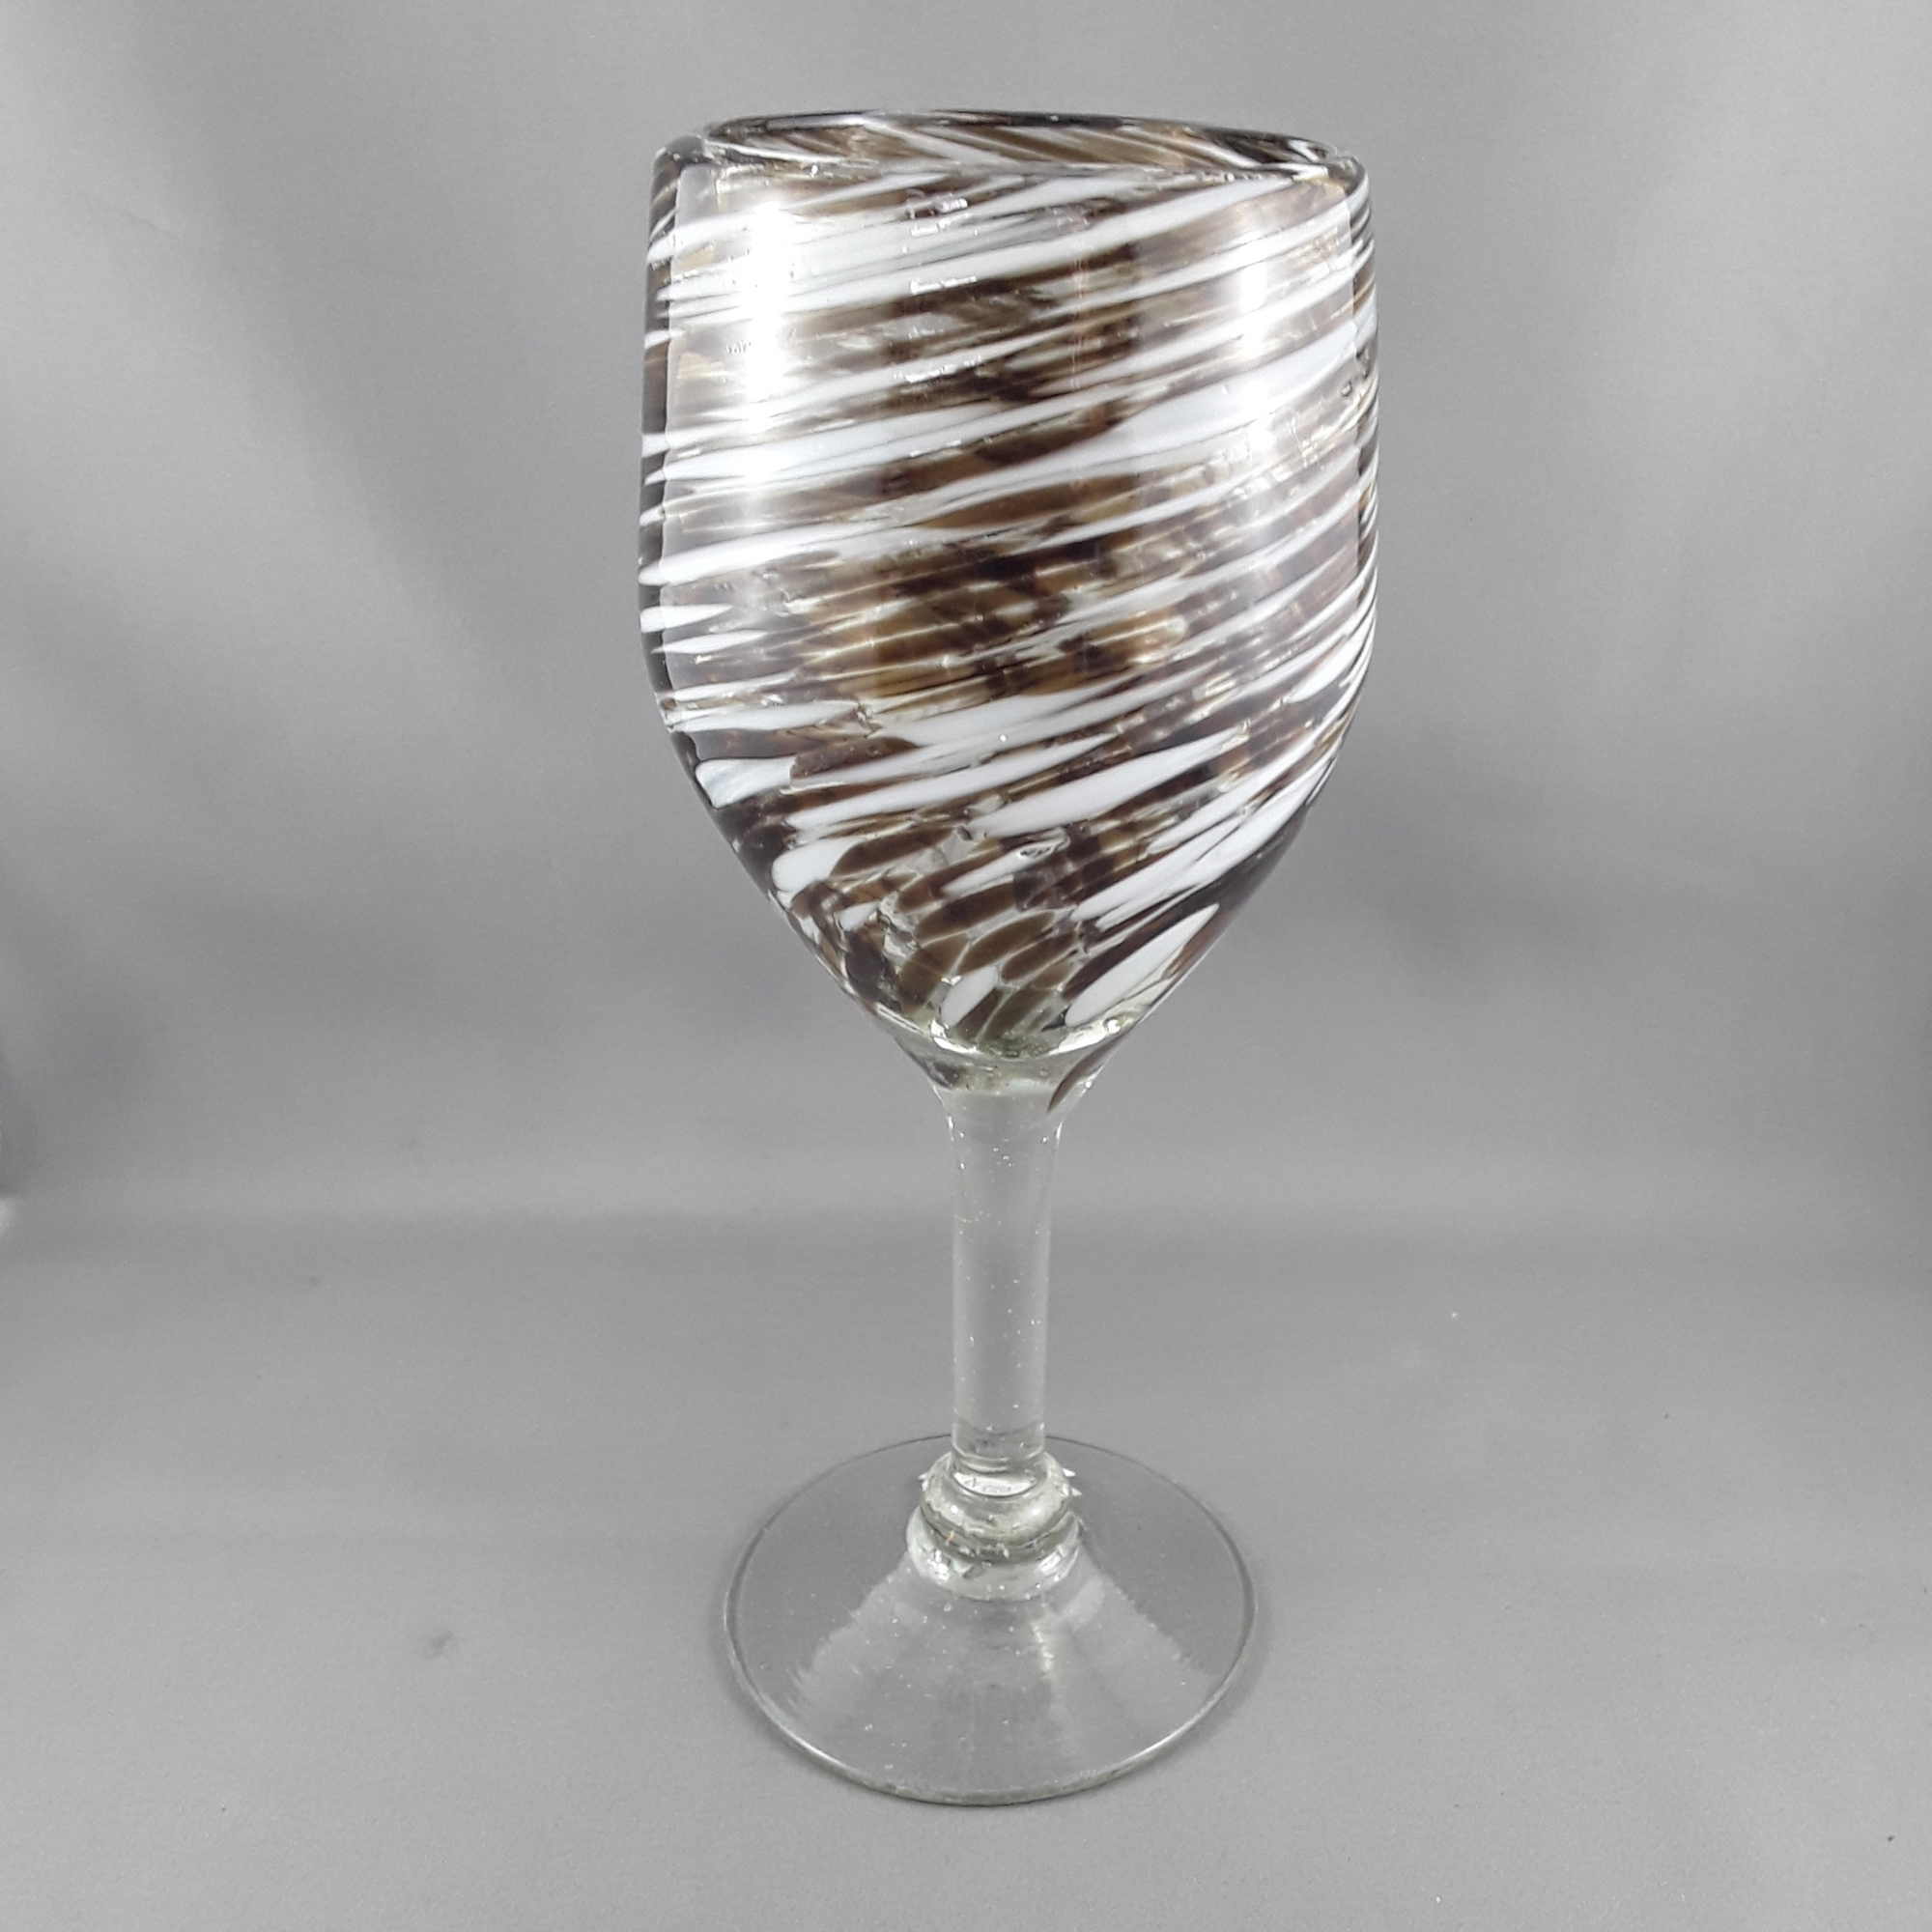 Wine glass | Brown & white - Birdie’s Nest Inc 